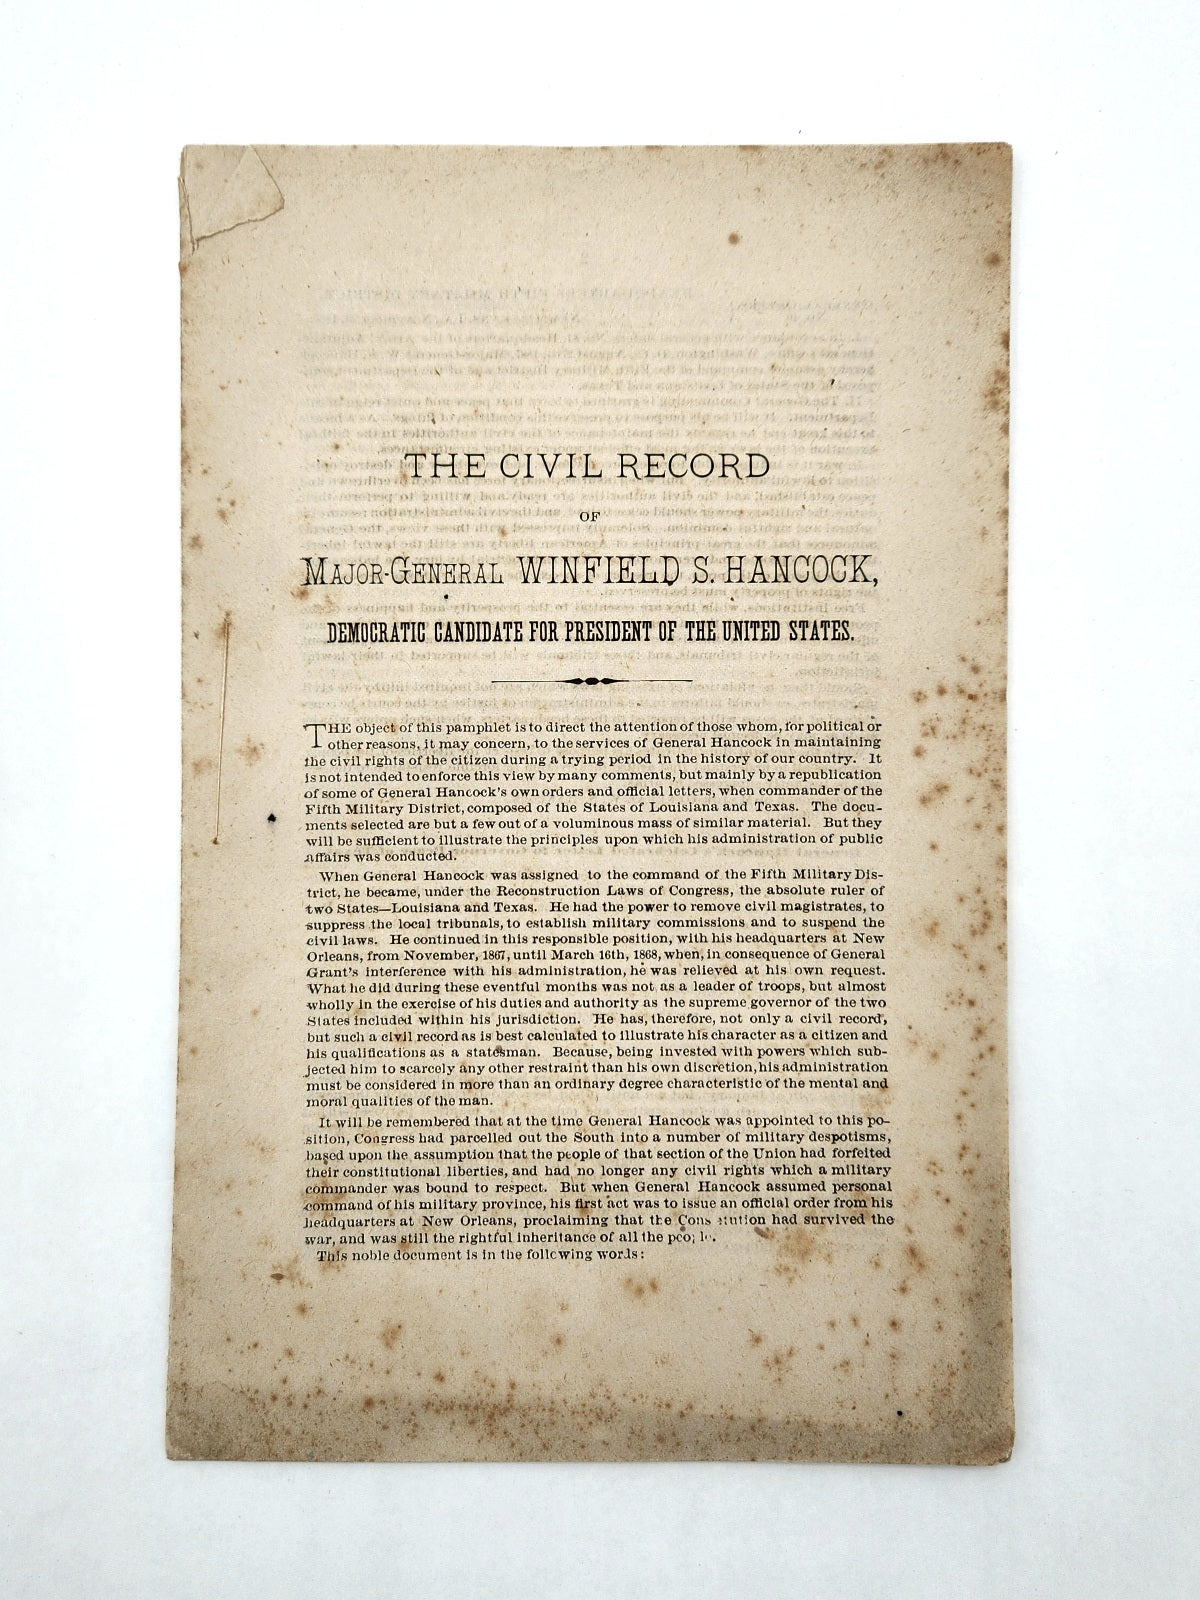 The Civil Record of Major General Winfield S. Hancock